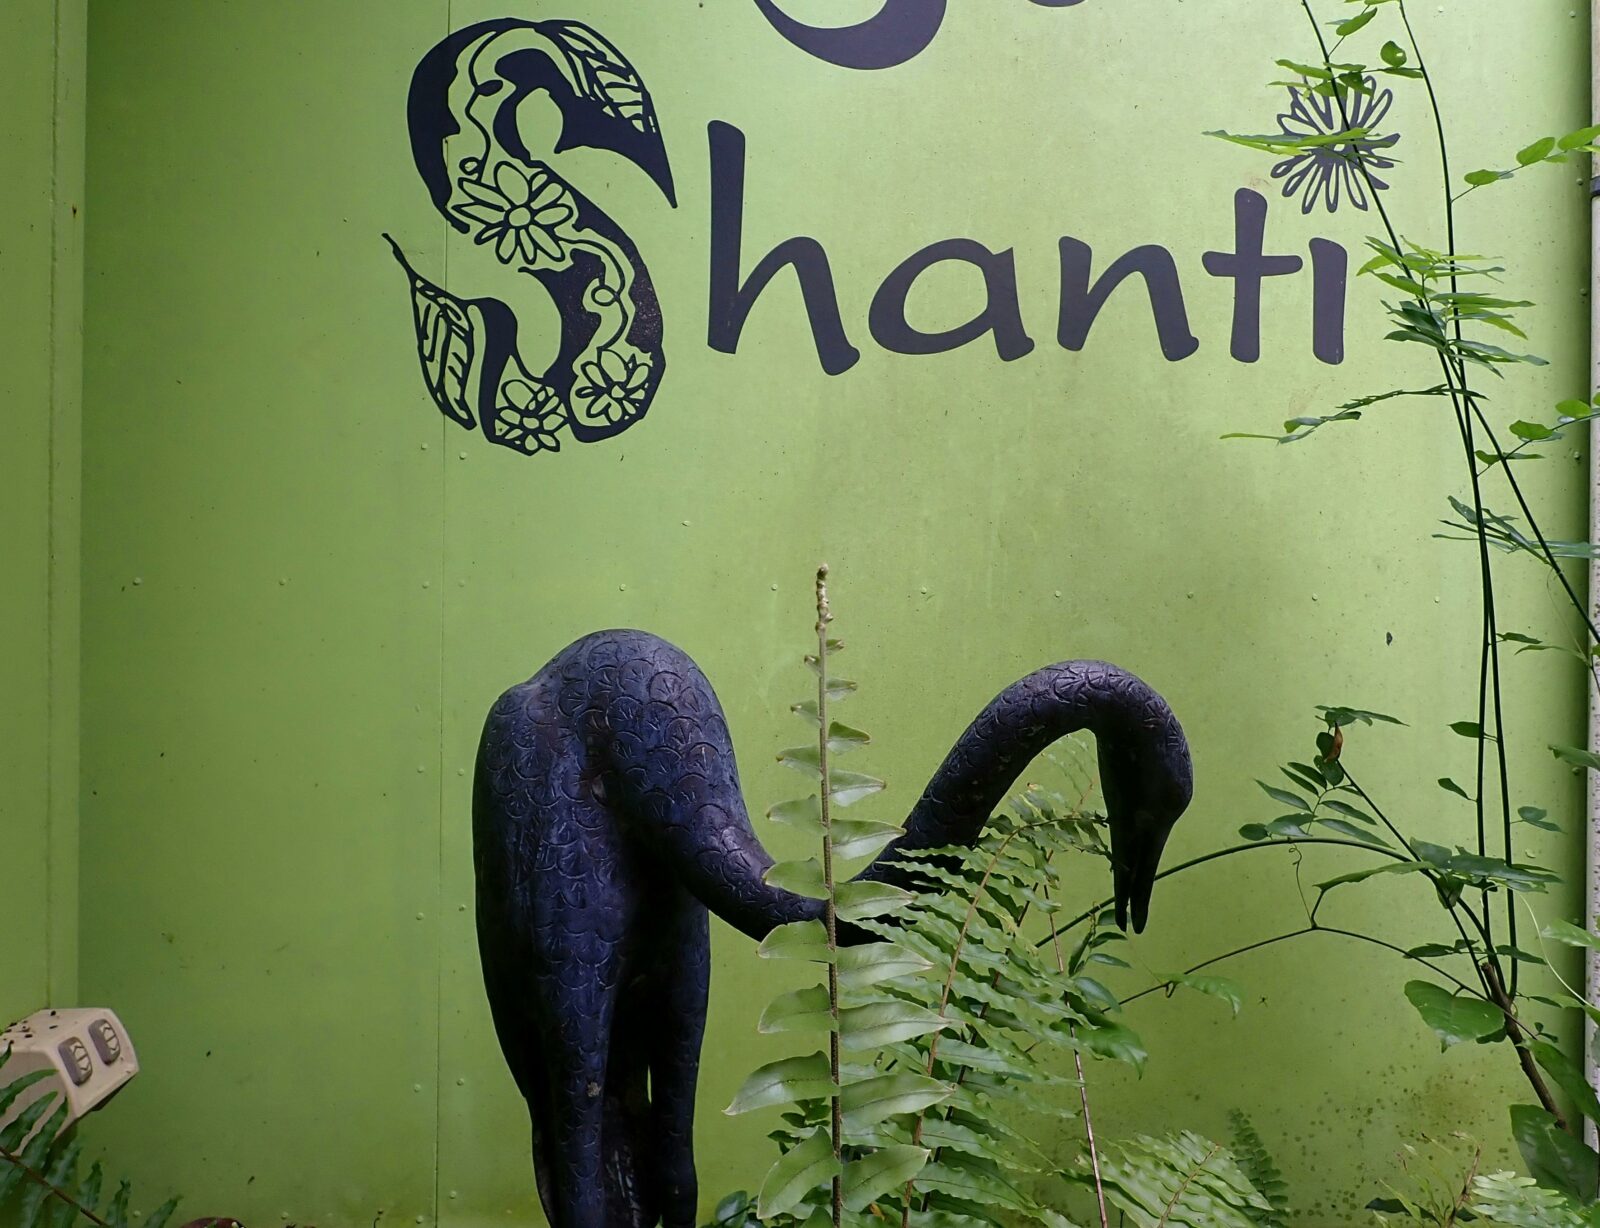 Shanti's garden crane